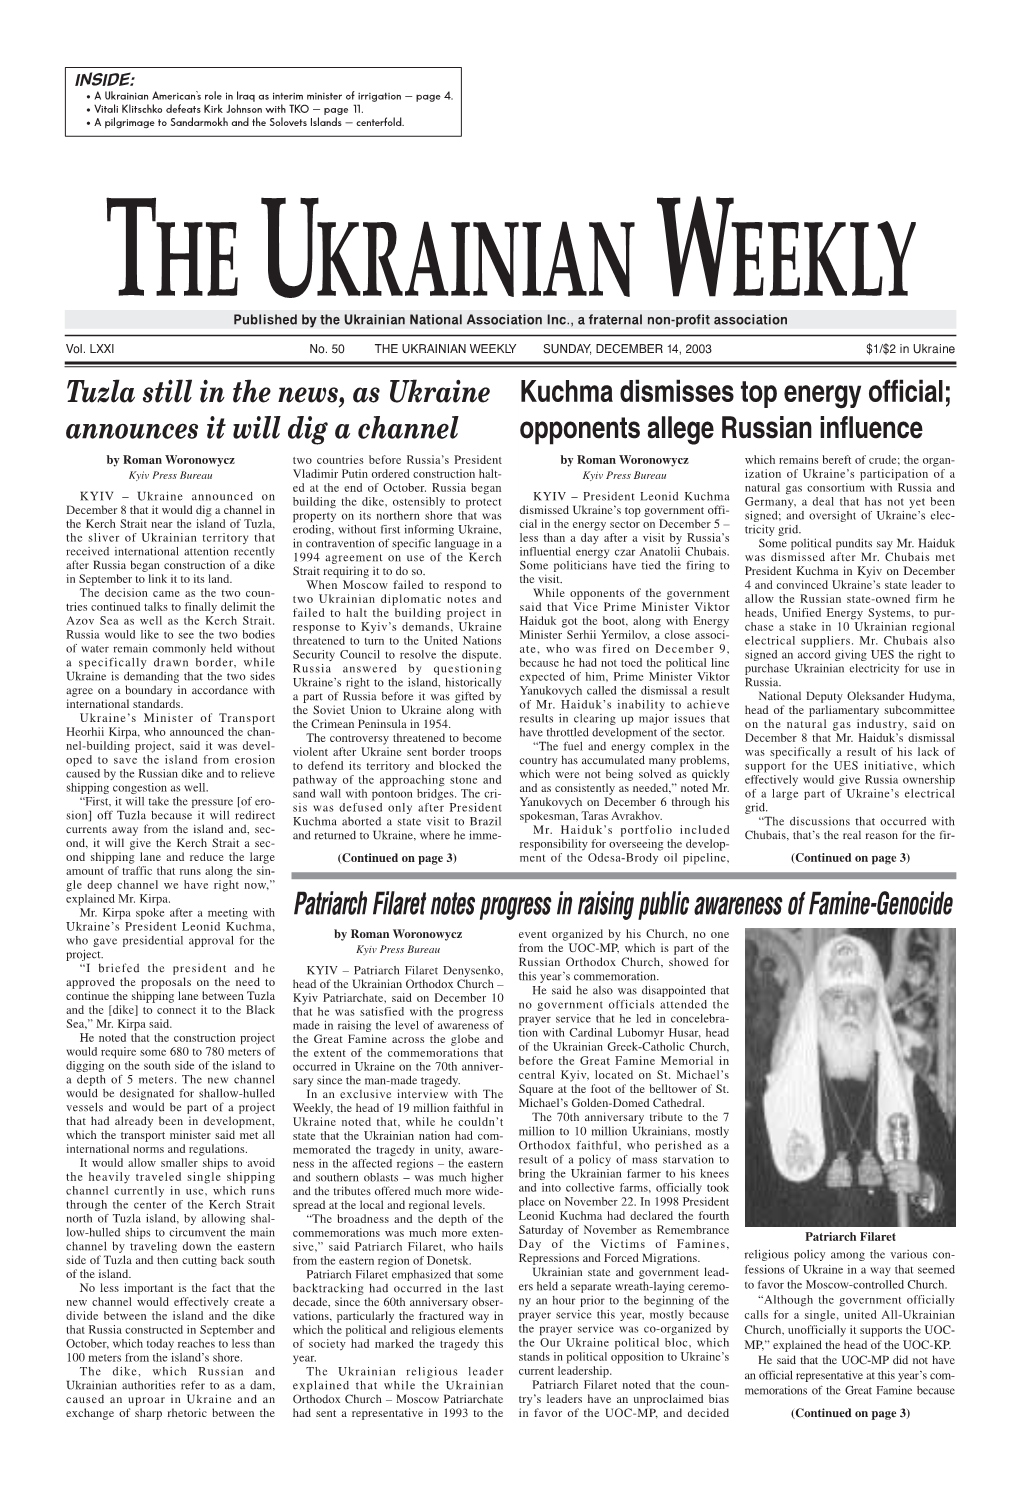 The Ukrainian Weekly 2003, No.50